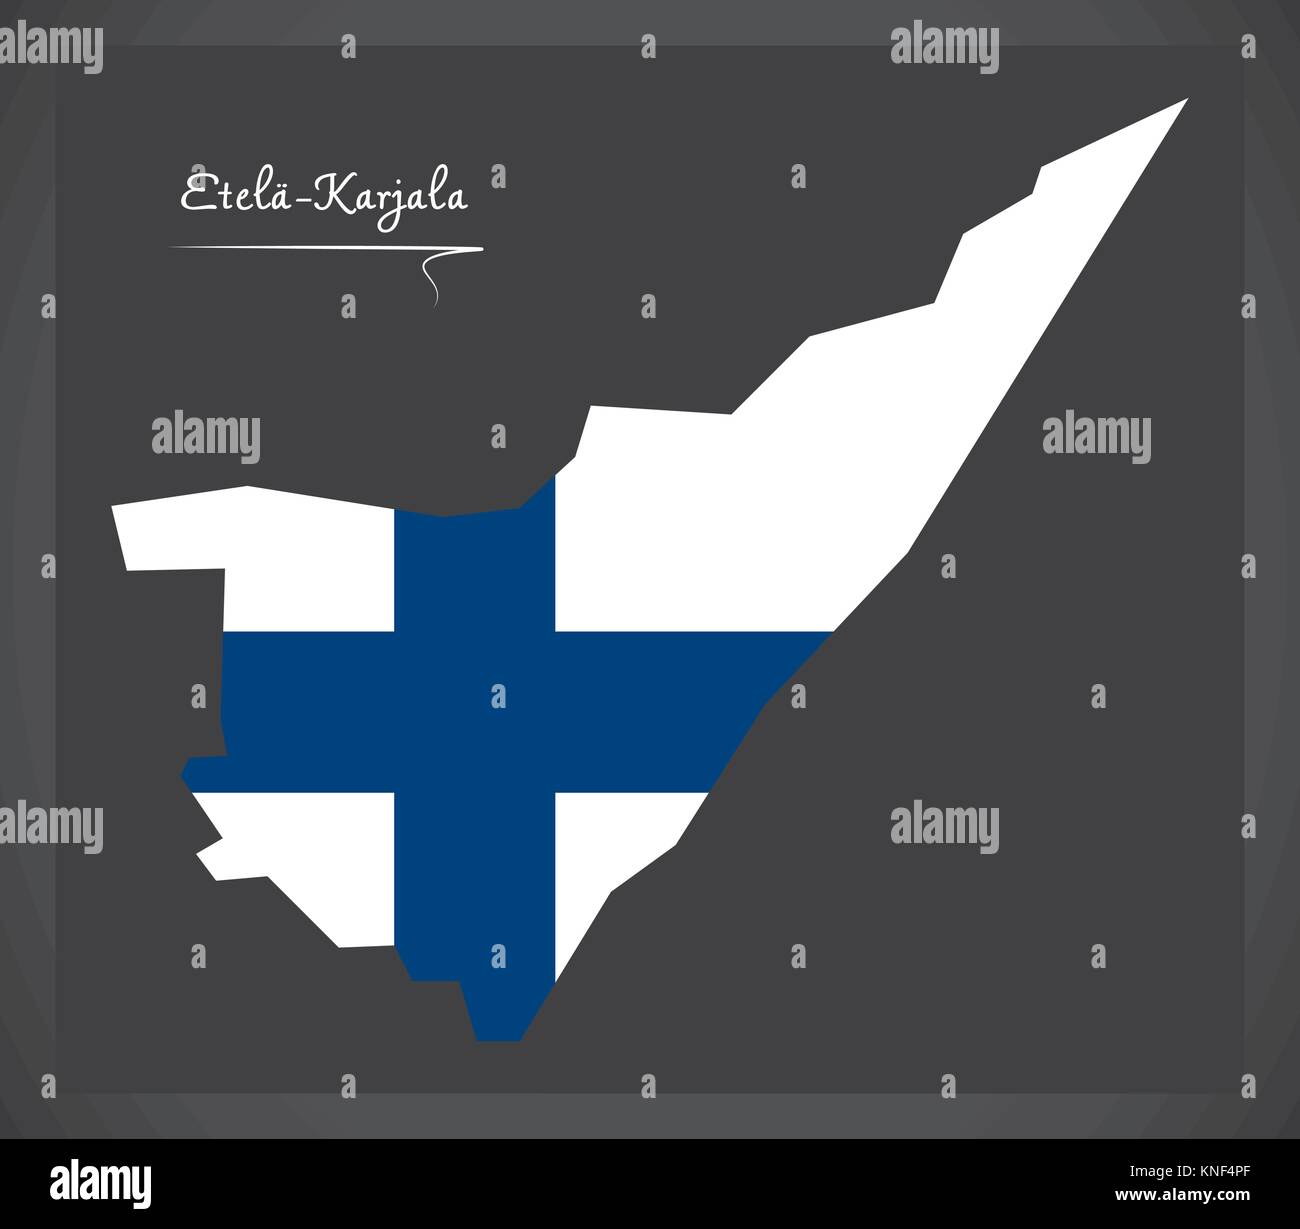 Etela-Karjala map of Finland with Finnish national flag illustration Stock Vector